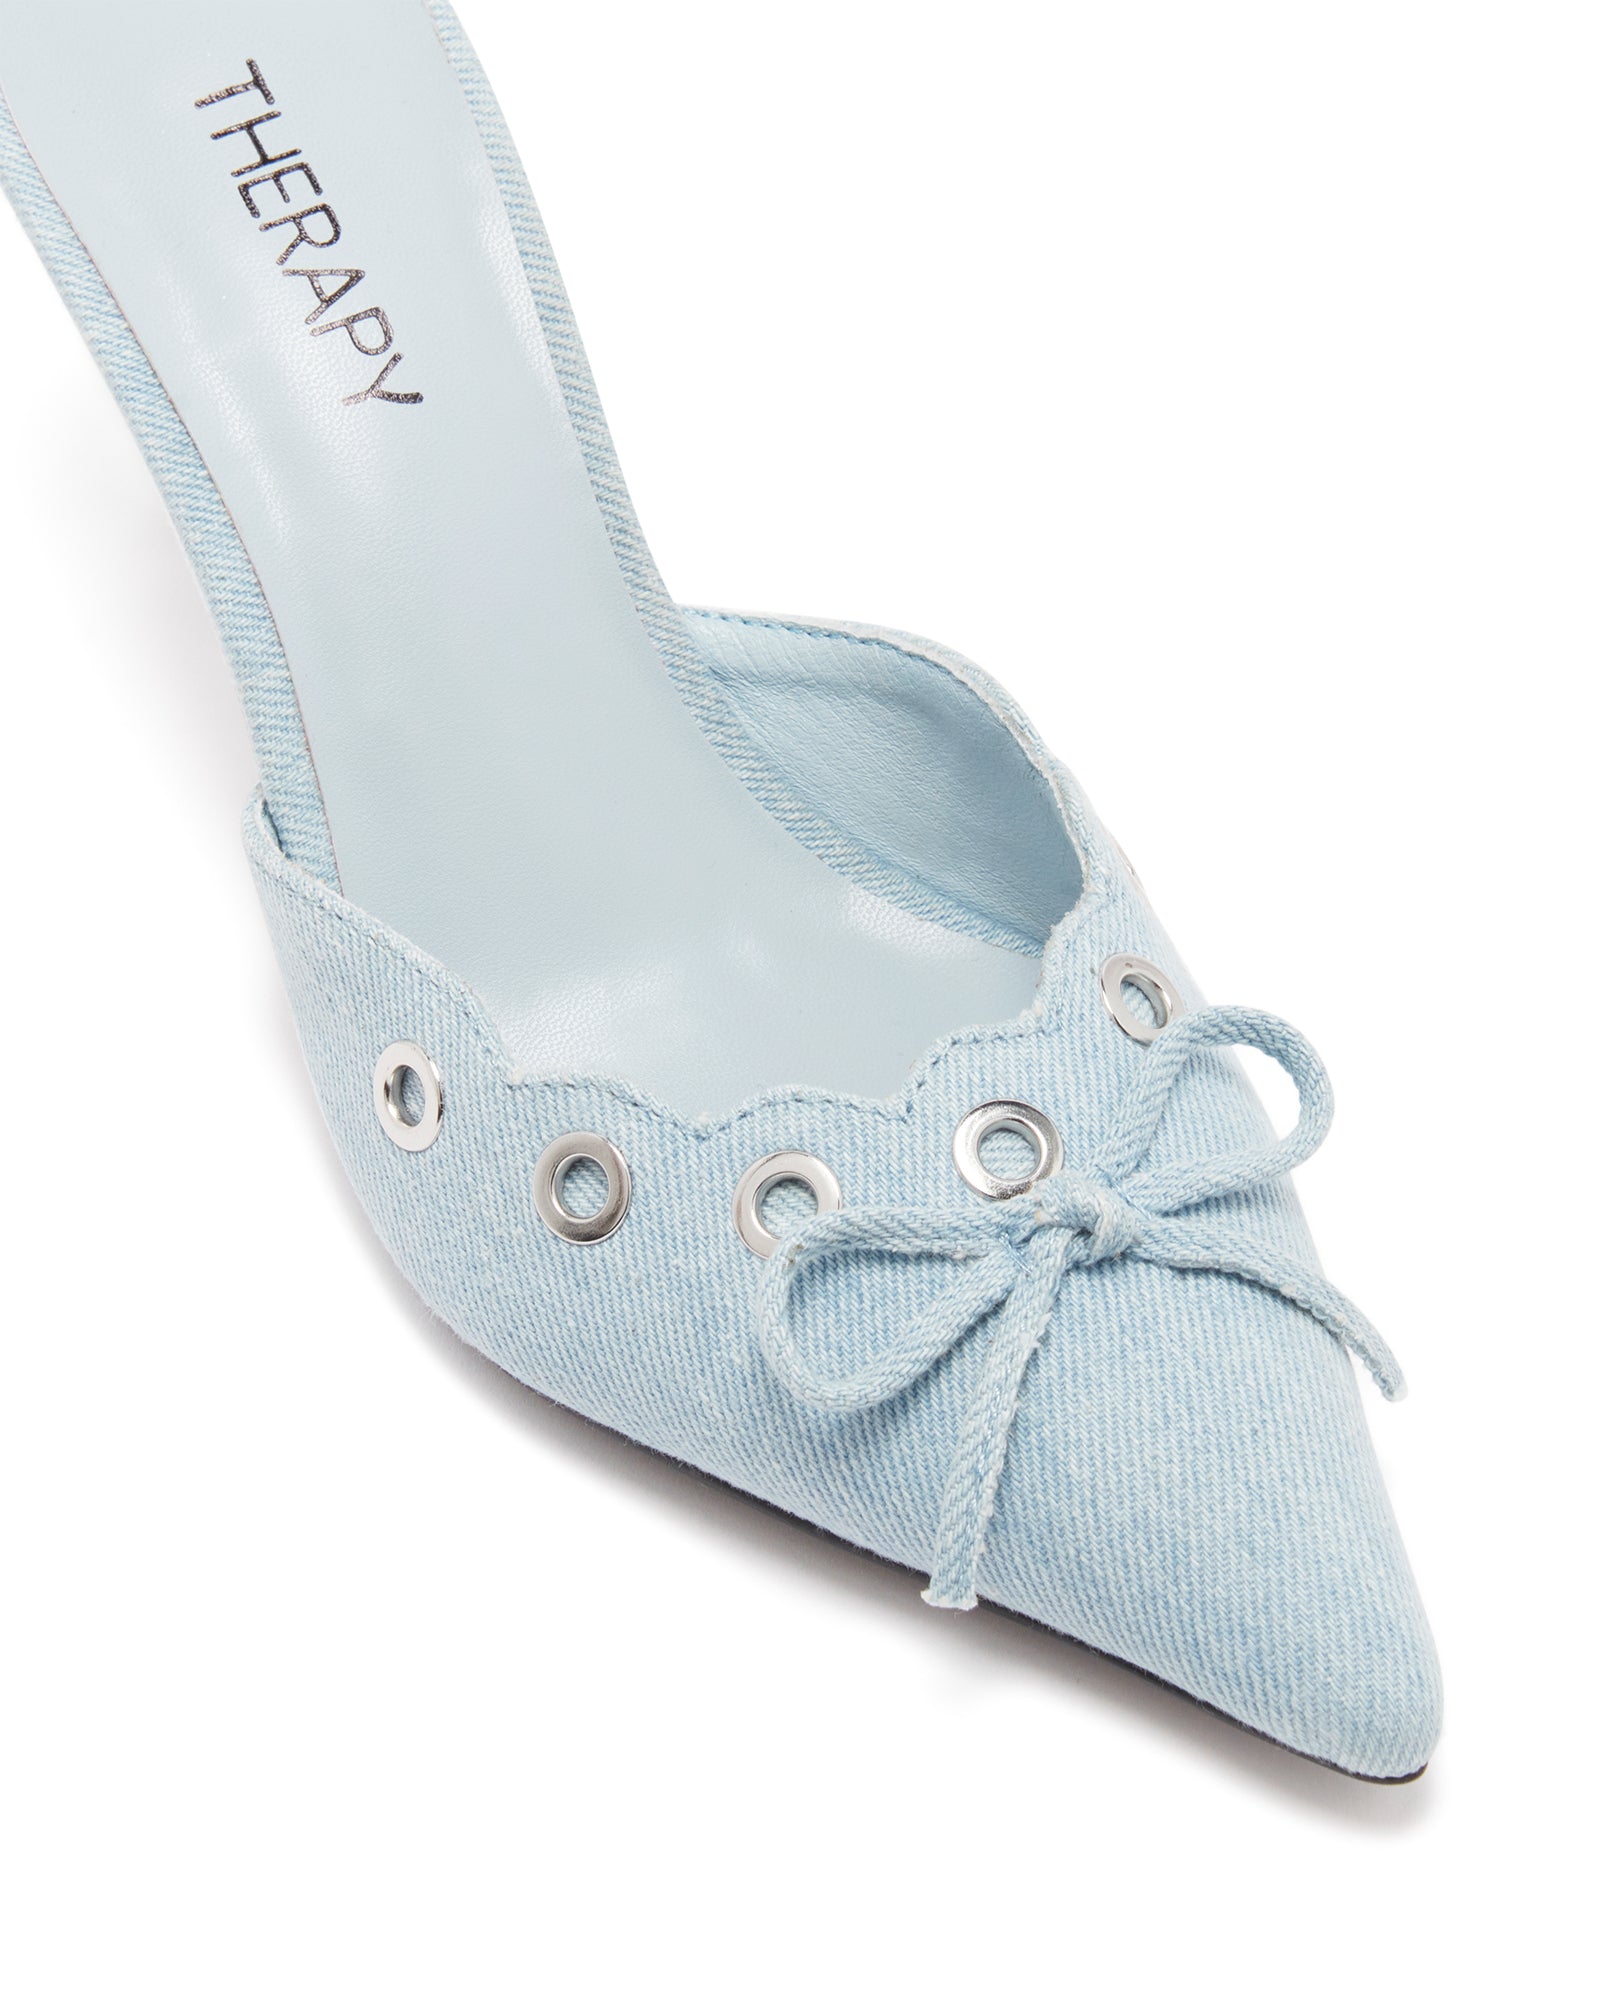 Therapy Shoes Justice Light Blue Denim | Women's Heels | Pumps | Kitten